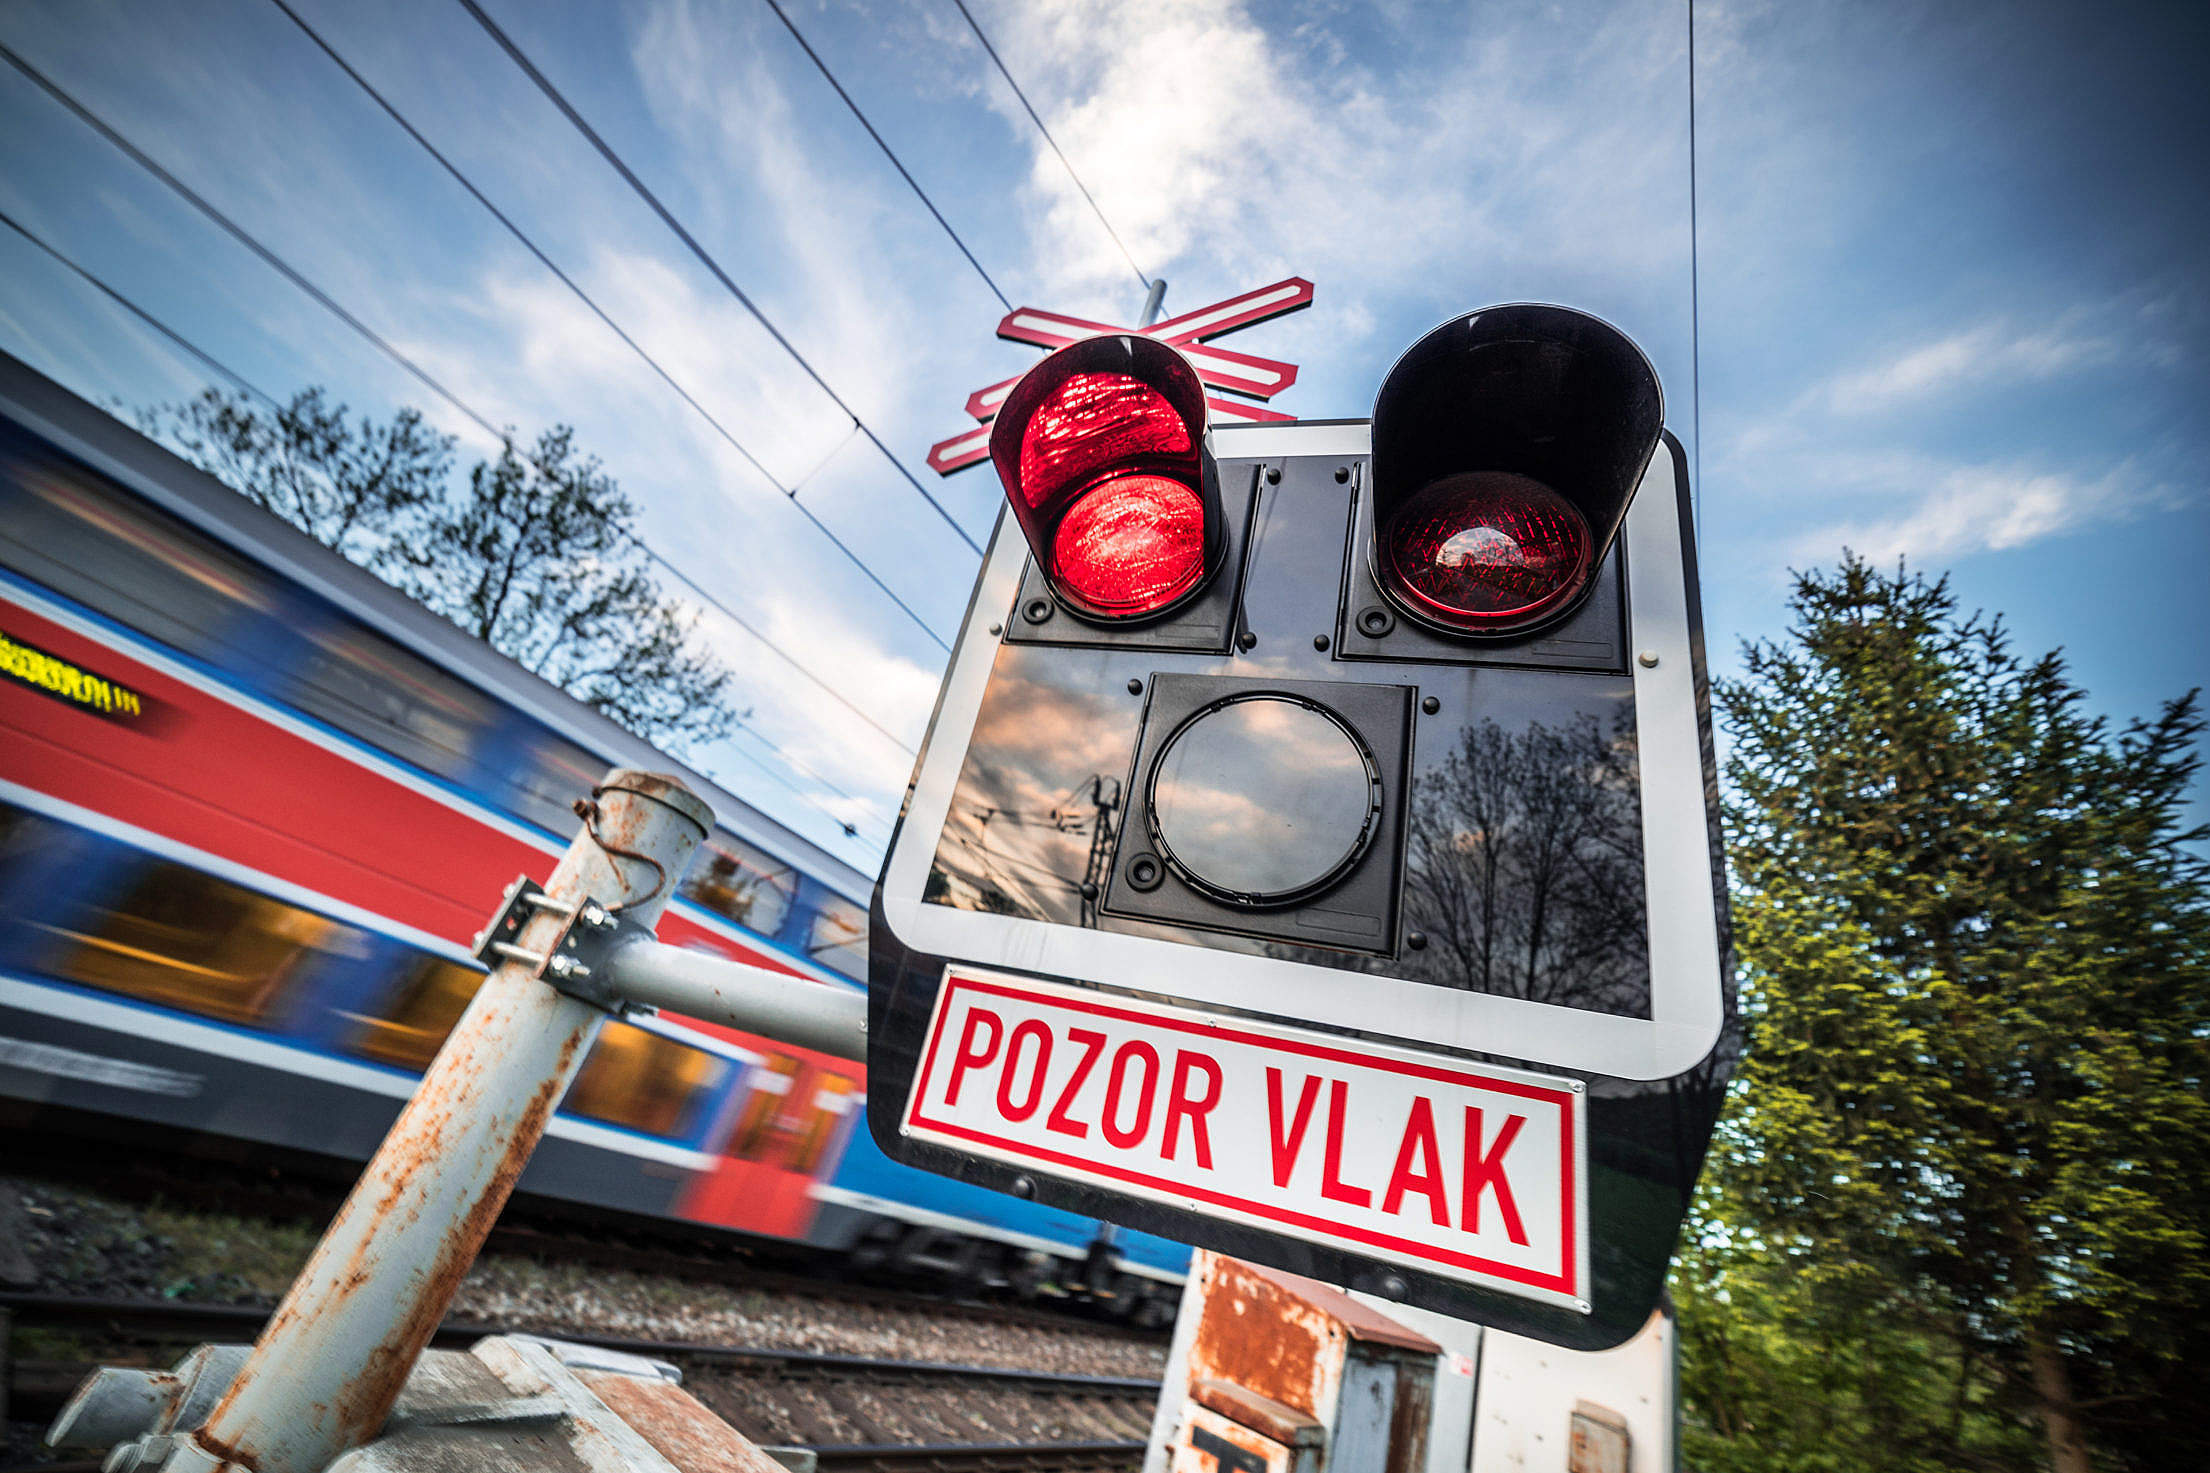 Pozor Vlak Czech Railway Crossing Sign Free Stock Photo Picjumbo | My ...